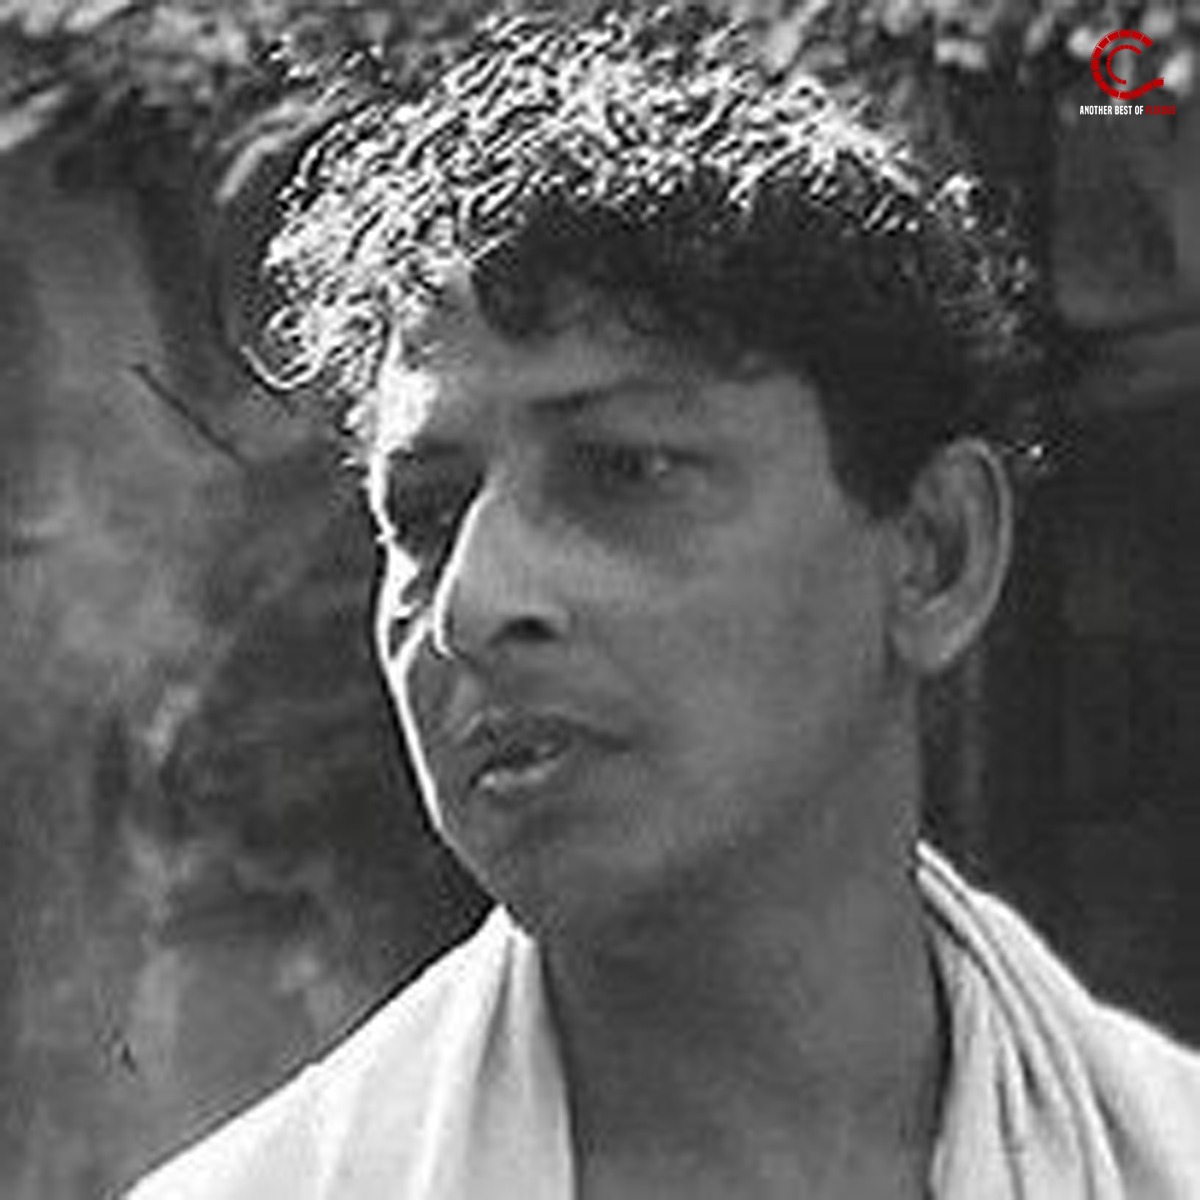 Tribute to Satyajit Ray - His movie & the character in the movie - Harihar Roy of Pather Panchali - Kanu Bandopadhyay.

#movie #patherpanchali #KanuBandopadhyay #satyajitray #bestdirector #character #film #award #ciinee #CiineeClassic